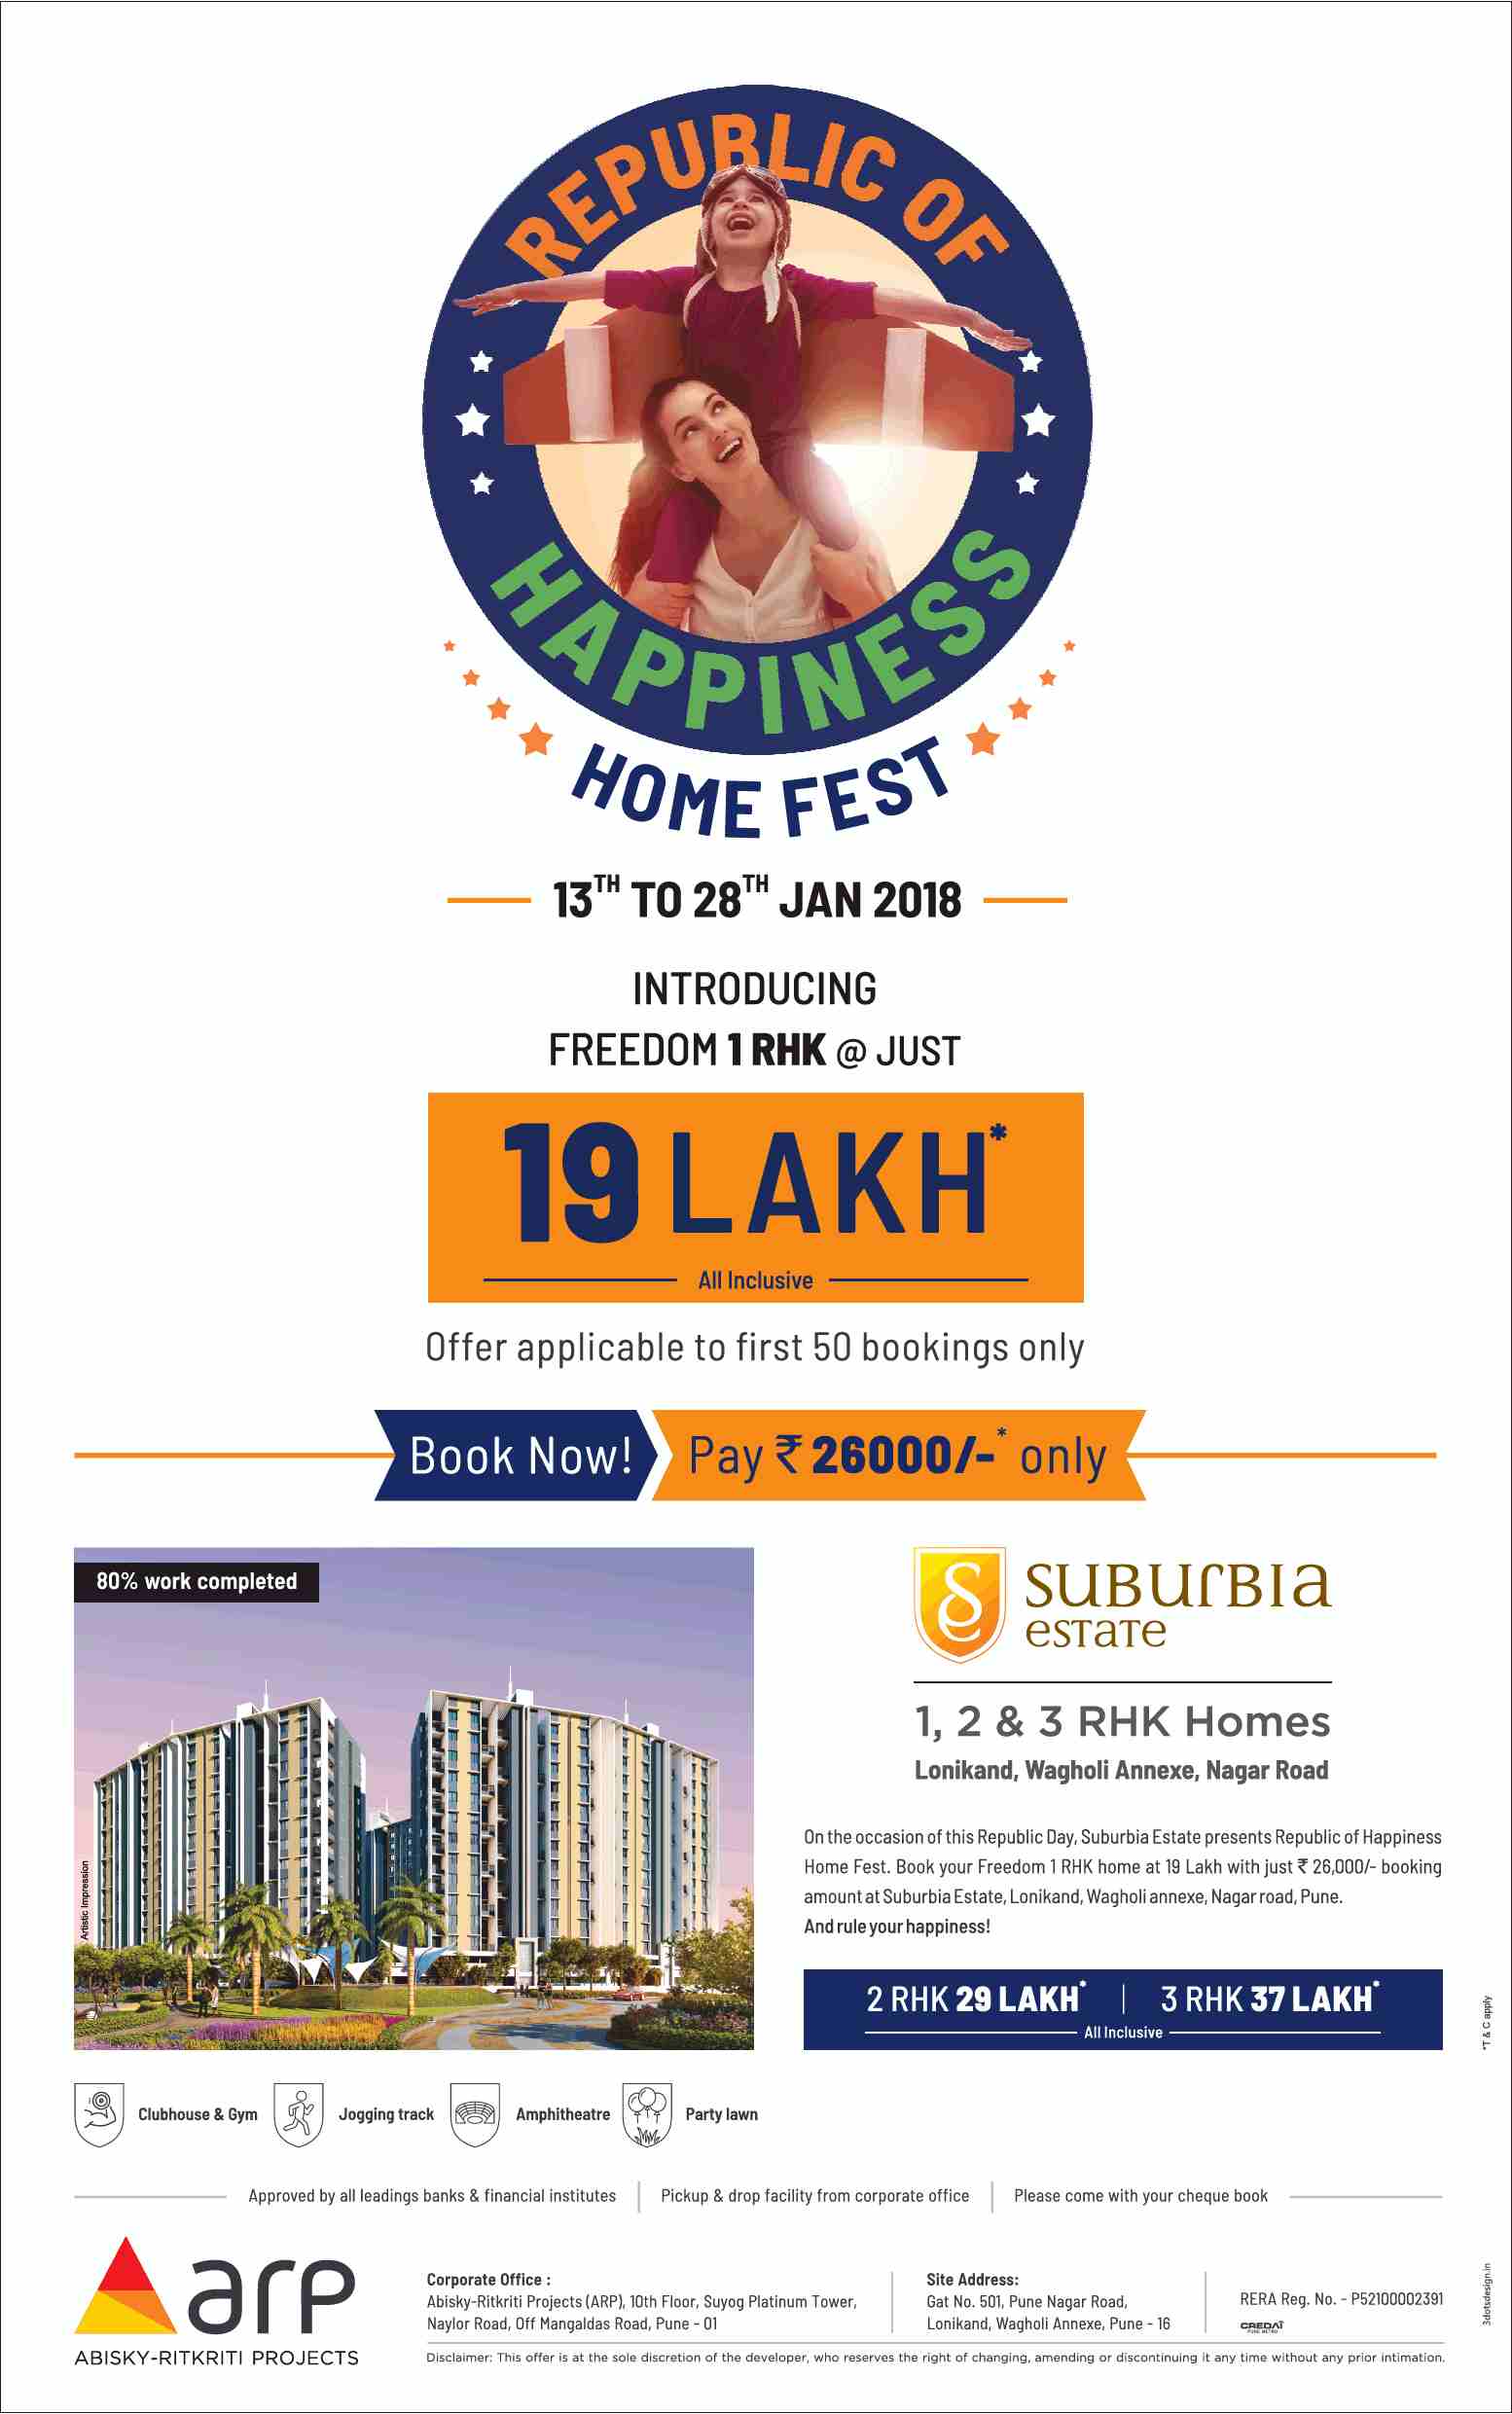 ARP Suburbia Estate presents Republic of Happiness Home Fest in Pune Update